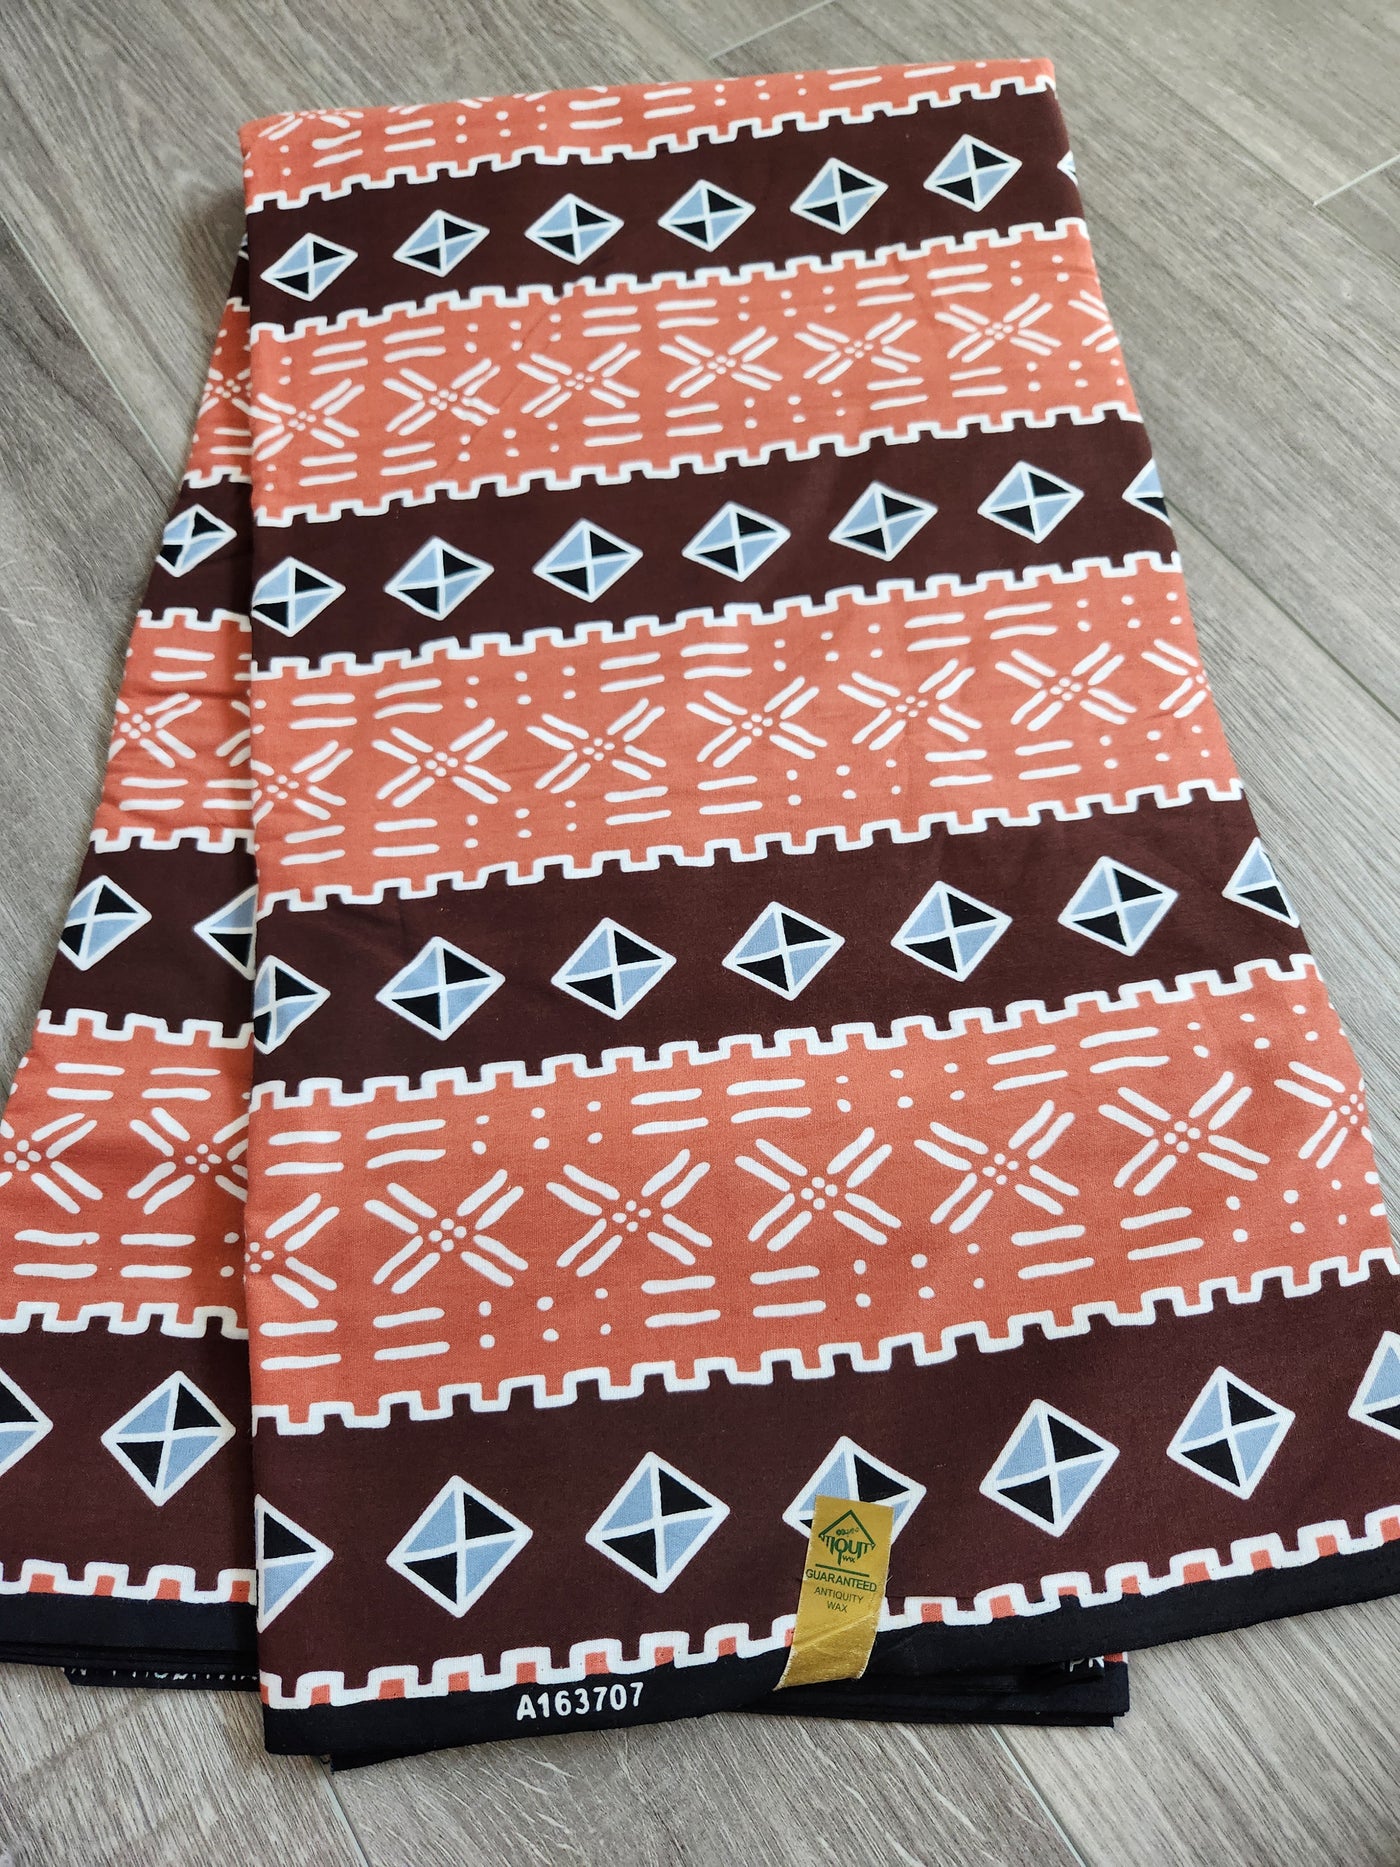 Coral Tribal Ankara Print Fabric